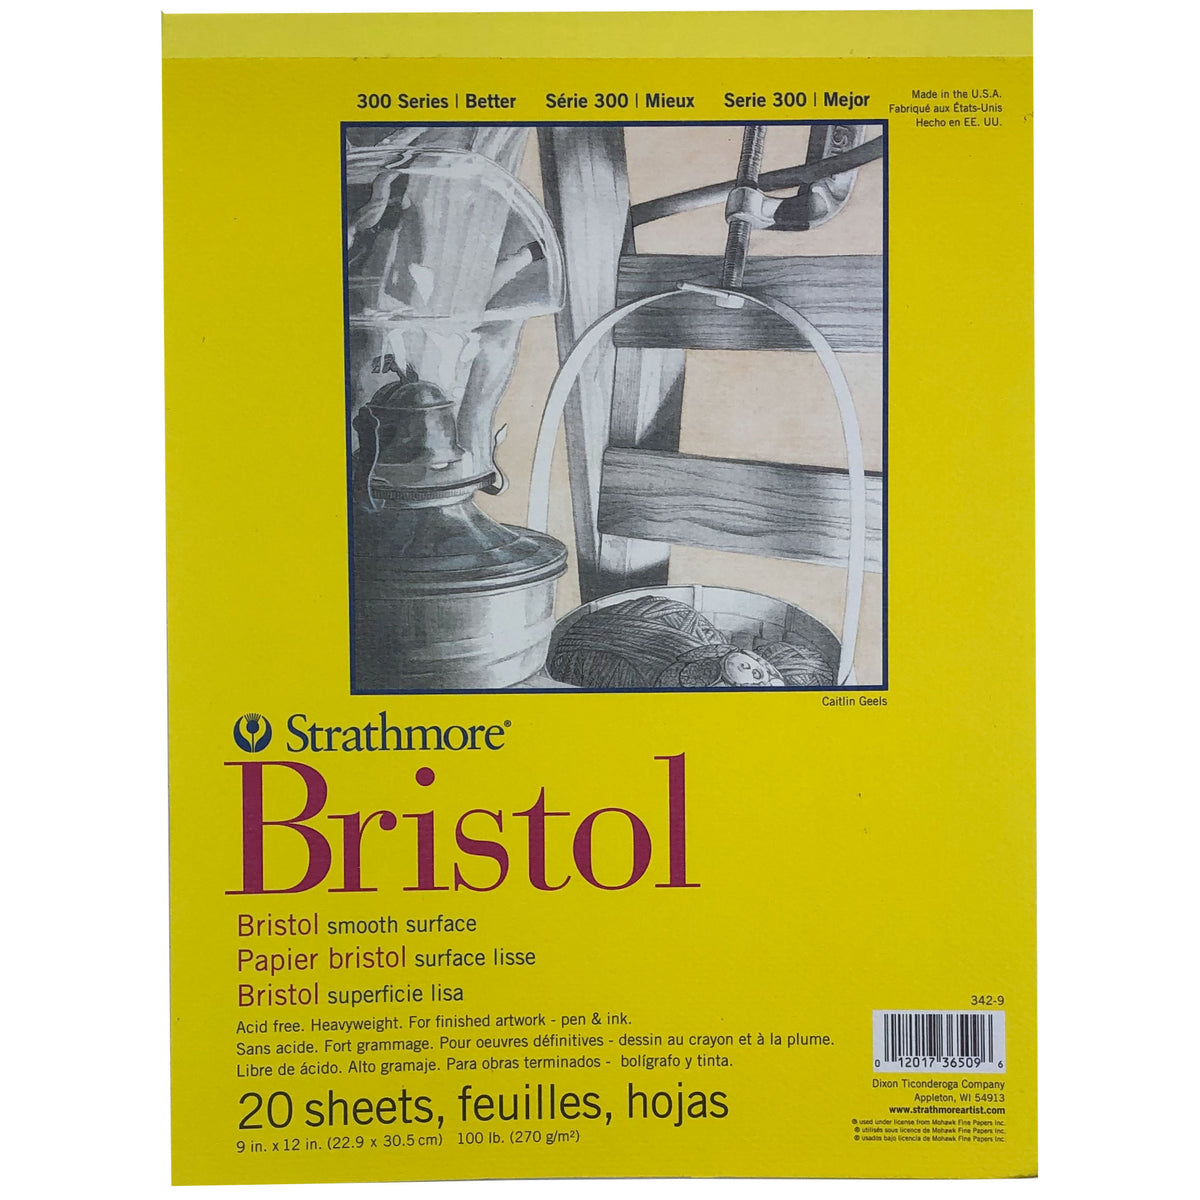 Strathmore Bristol Board: 20 Pages, 270 gsm (100lb), Paperback